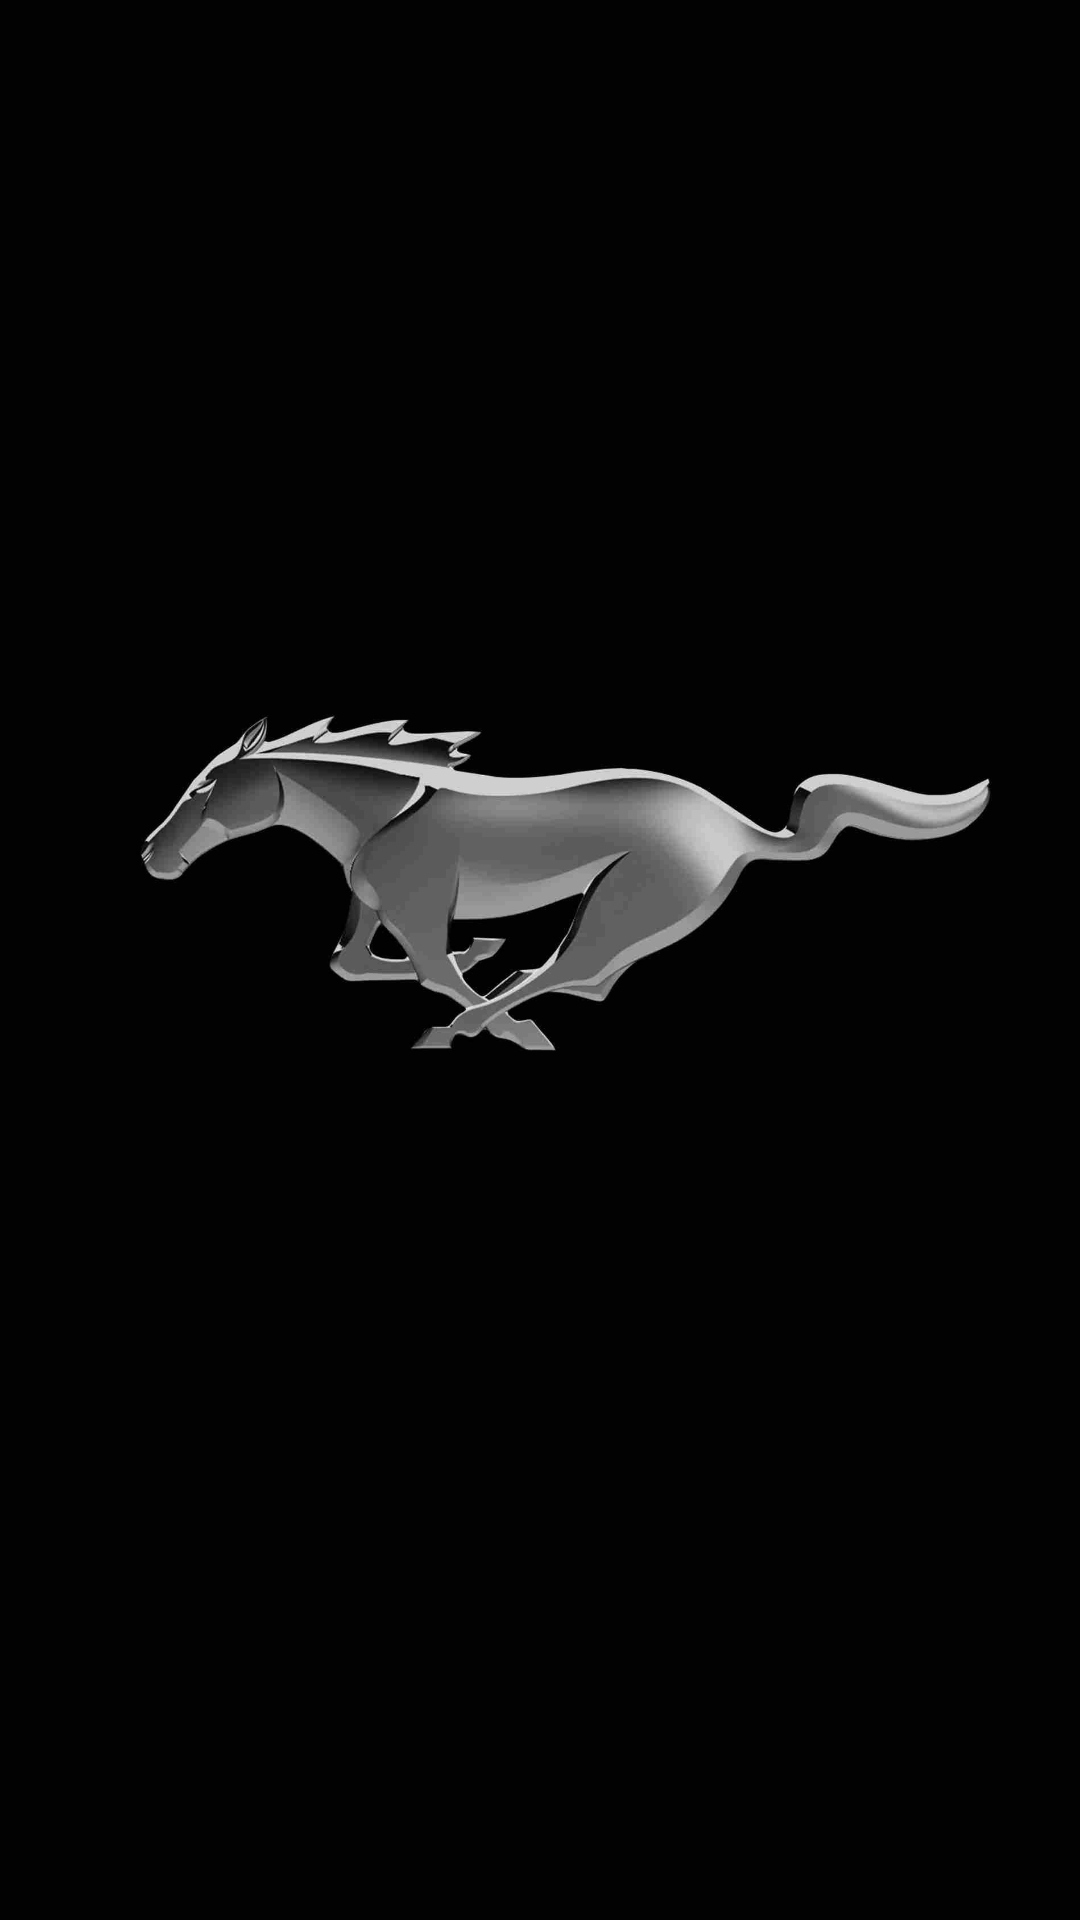 Mustang Logo Wallpaper Pictures